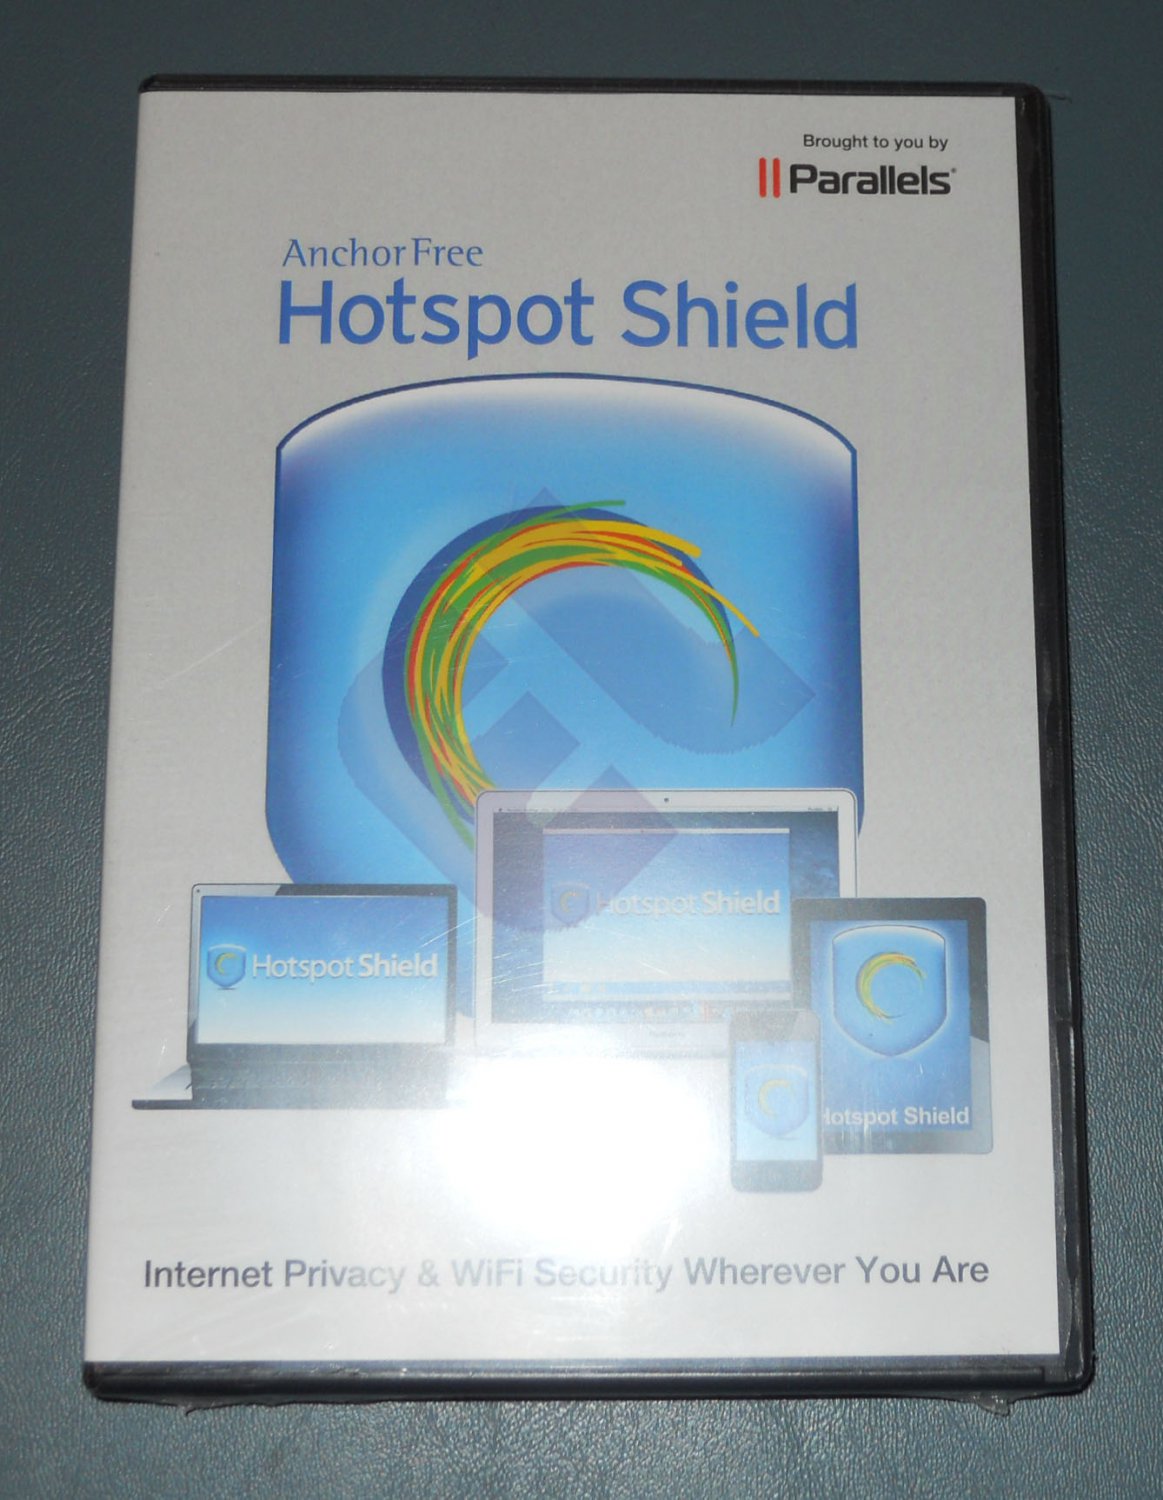 Shield Antivirus Pro 5.2.4 download the last version for ipod